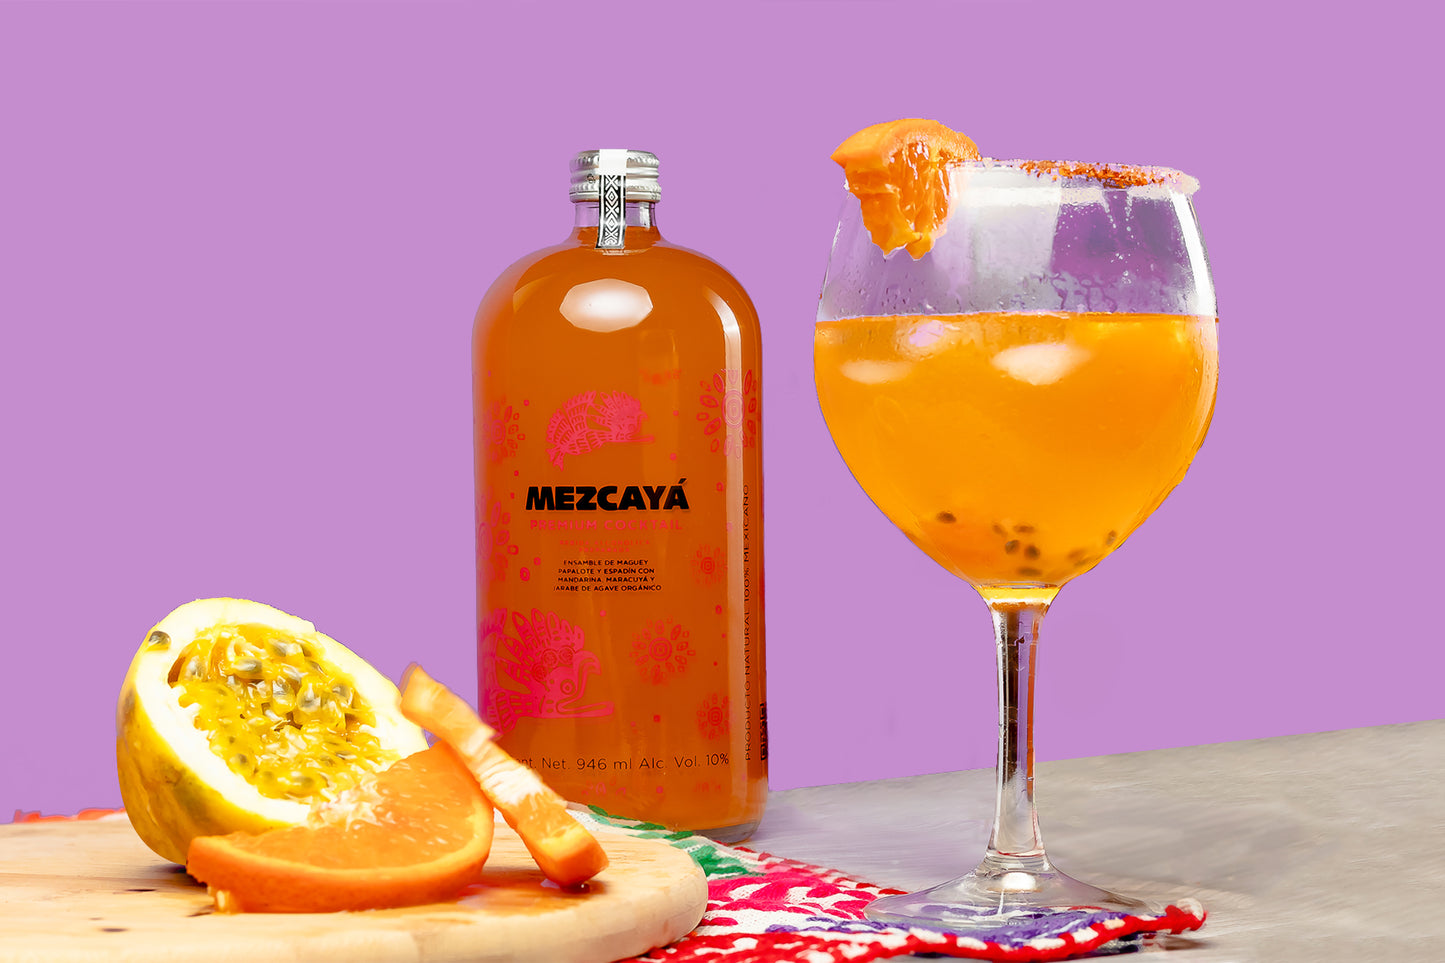   MEZCAYÁ Premium Cocktail  6 botellas de 946ml